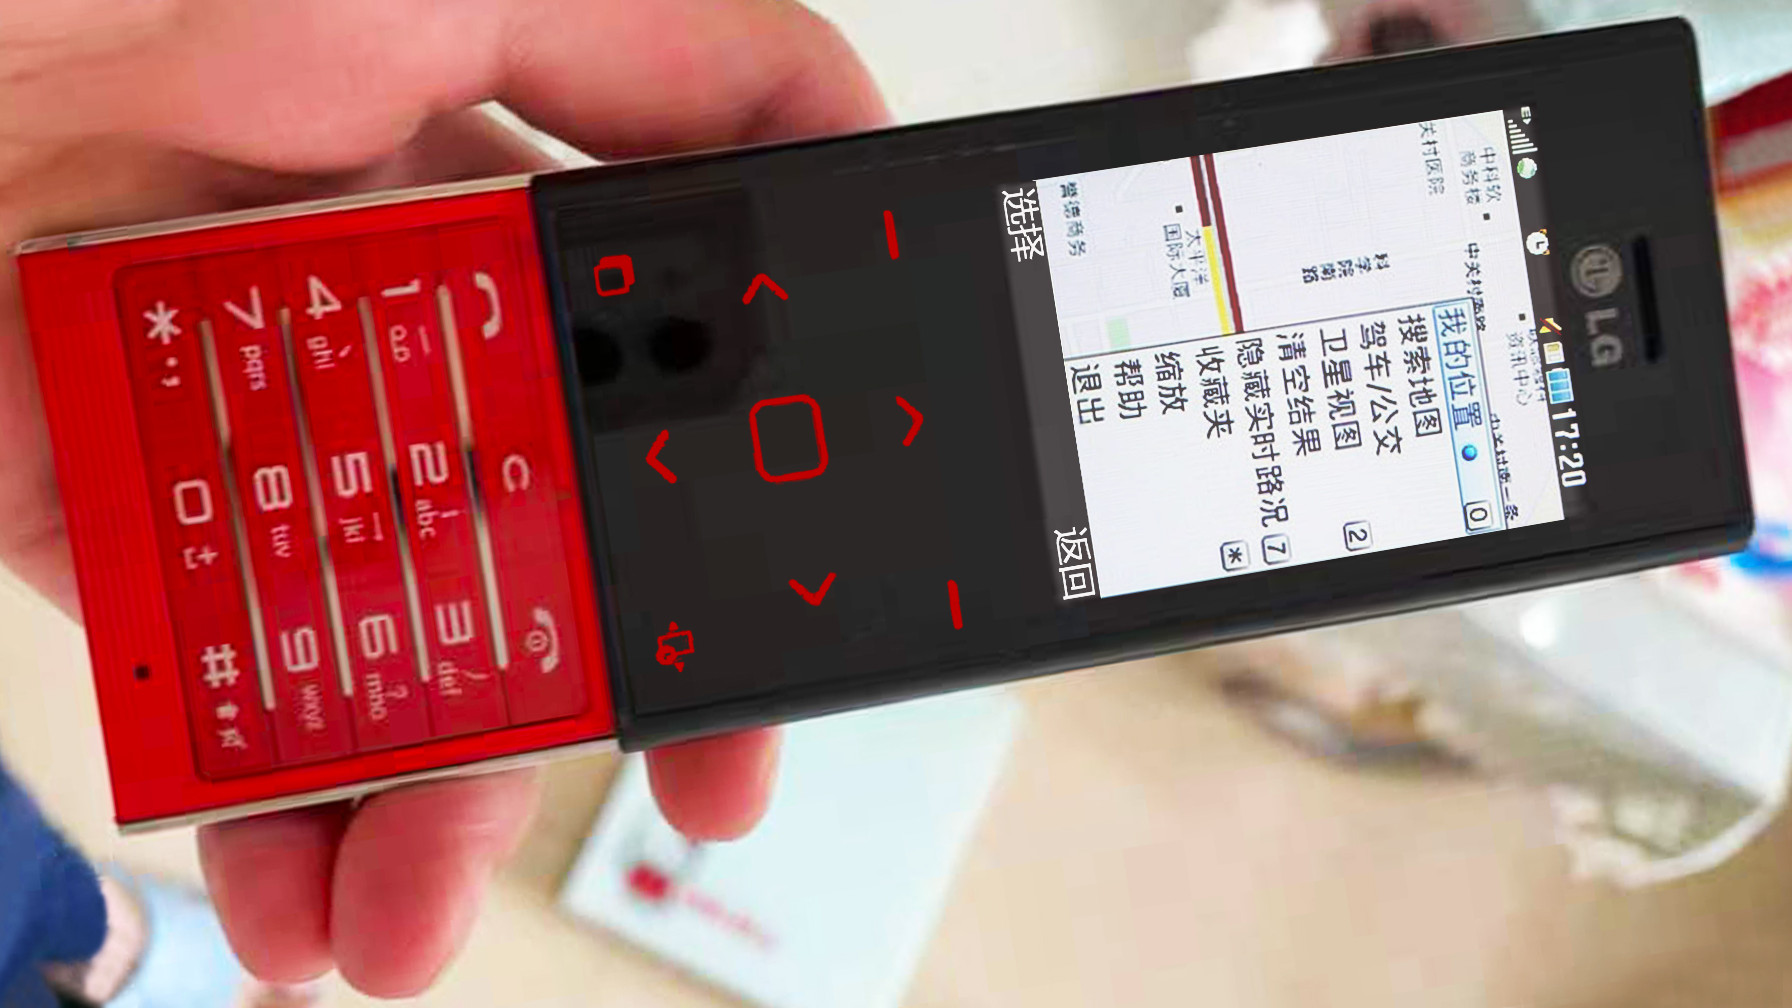 LG|外形像巧克力，体验这款二手LG滑盖手机，黑红色设计创造经典